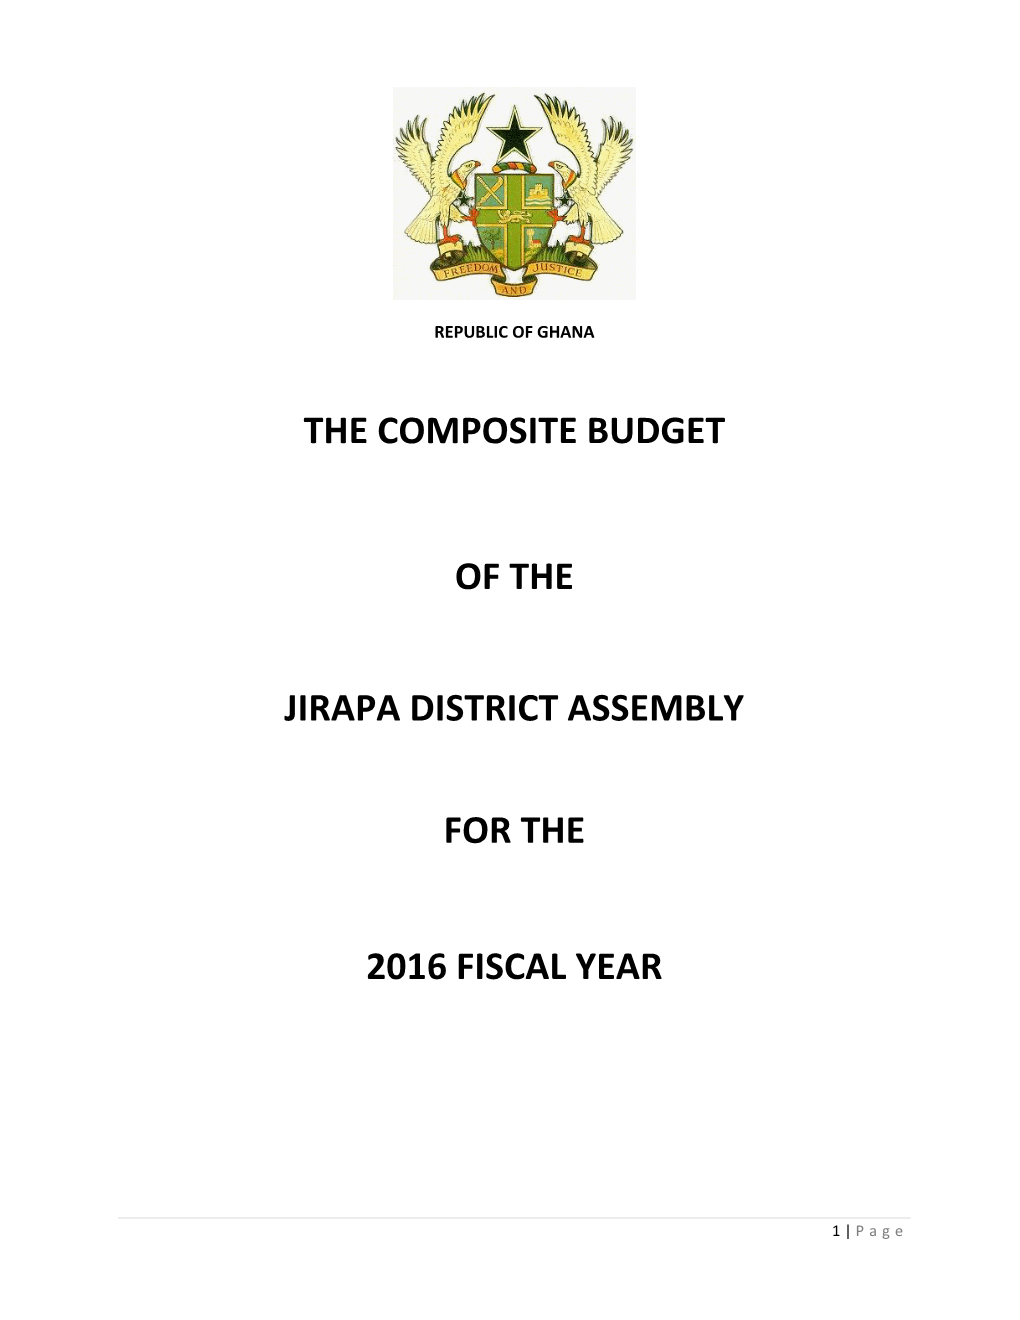 Jirapa District Assembly